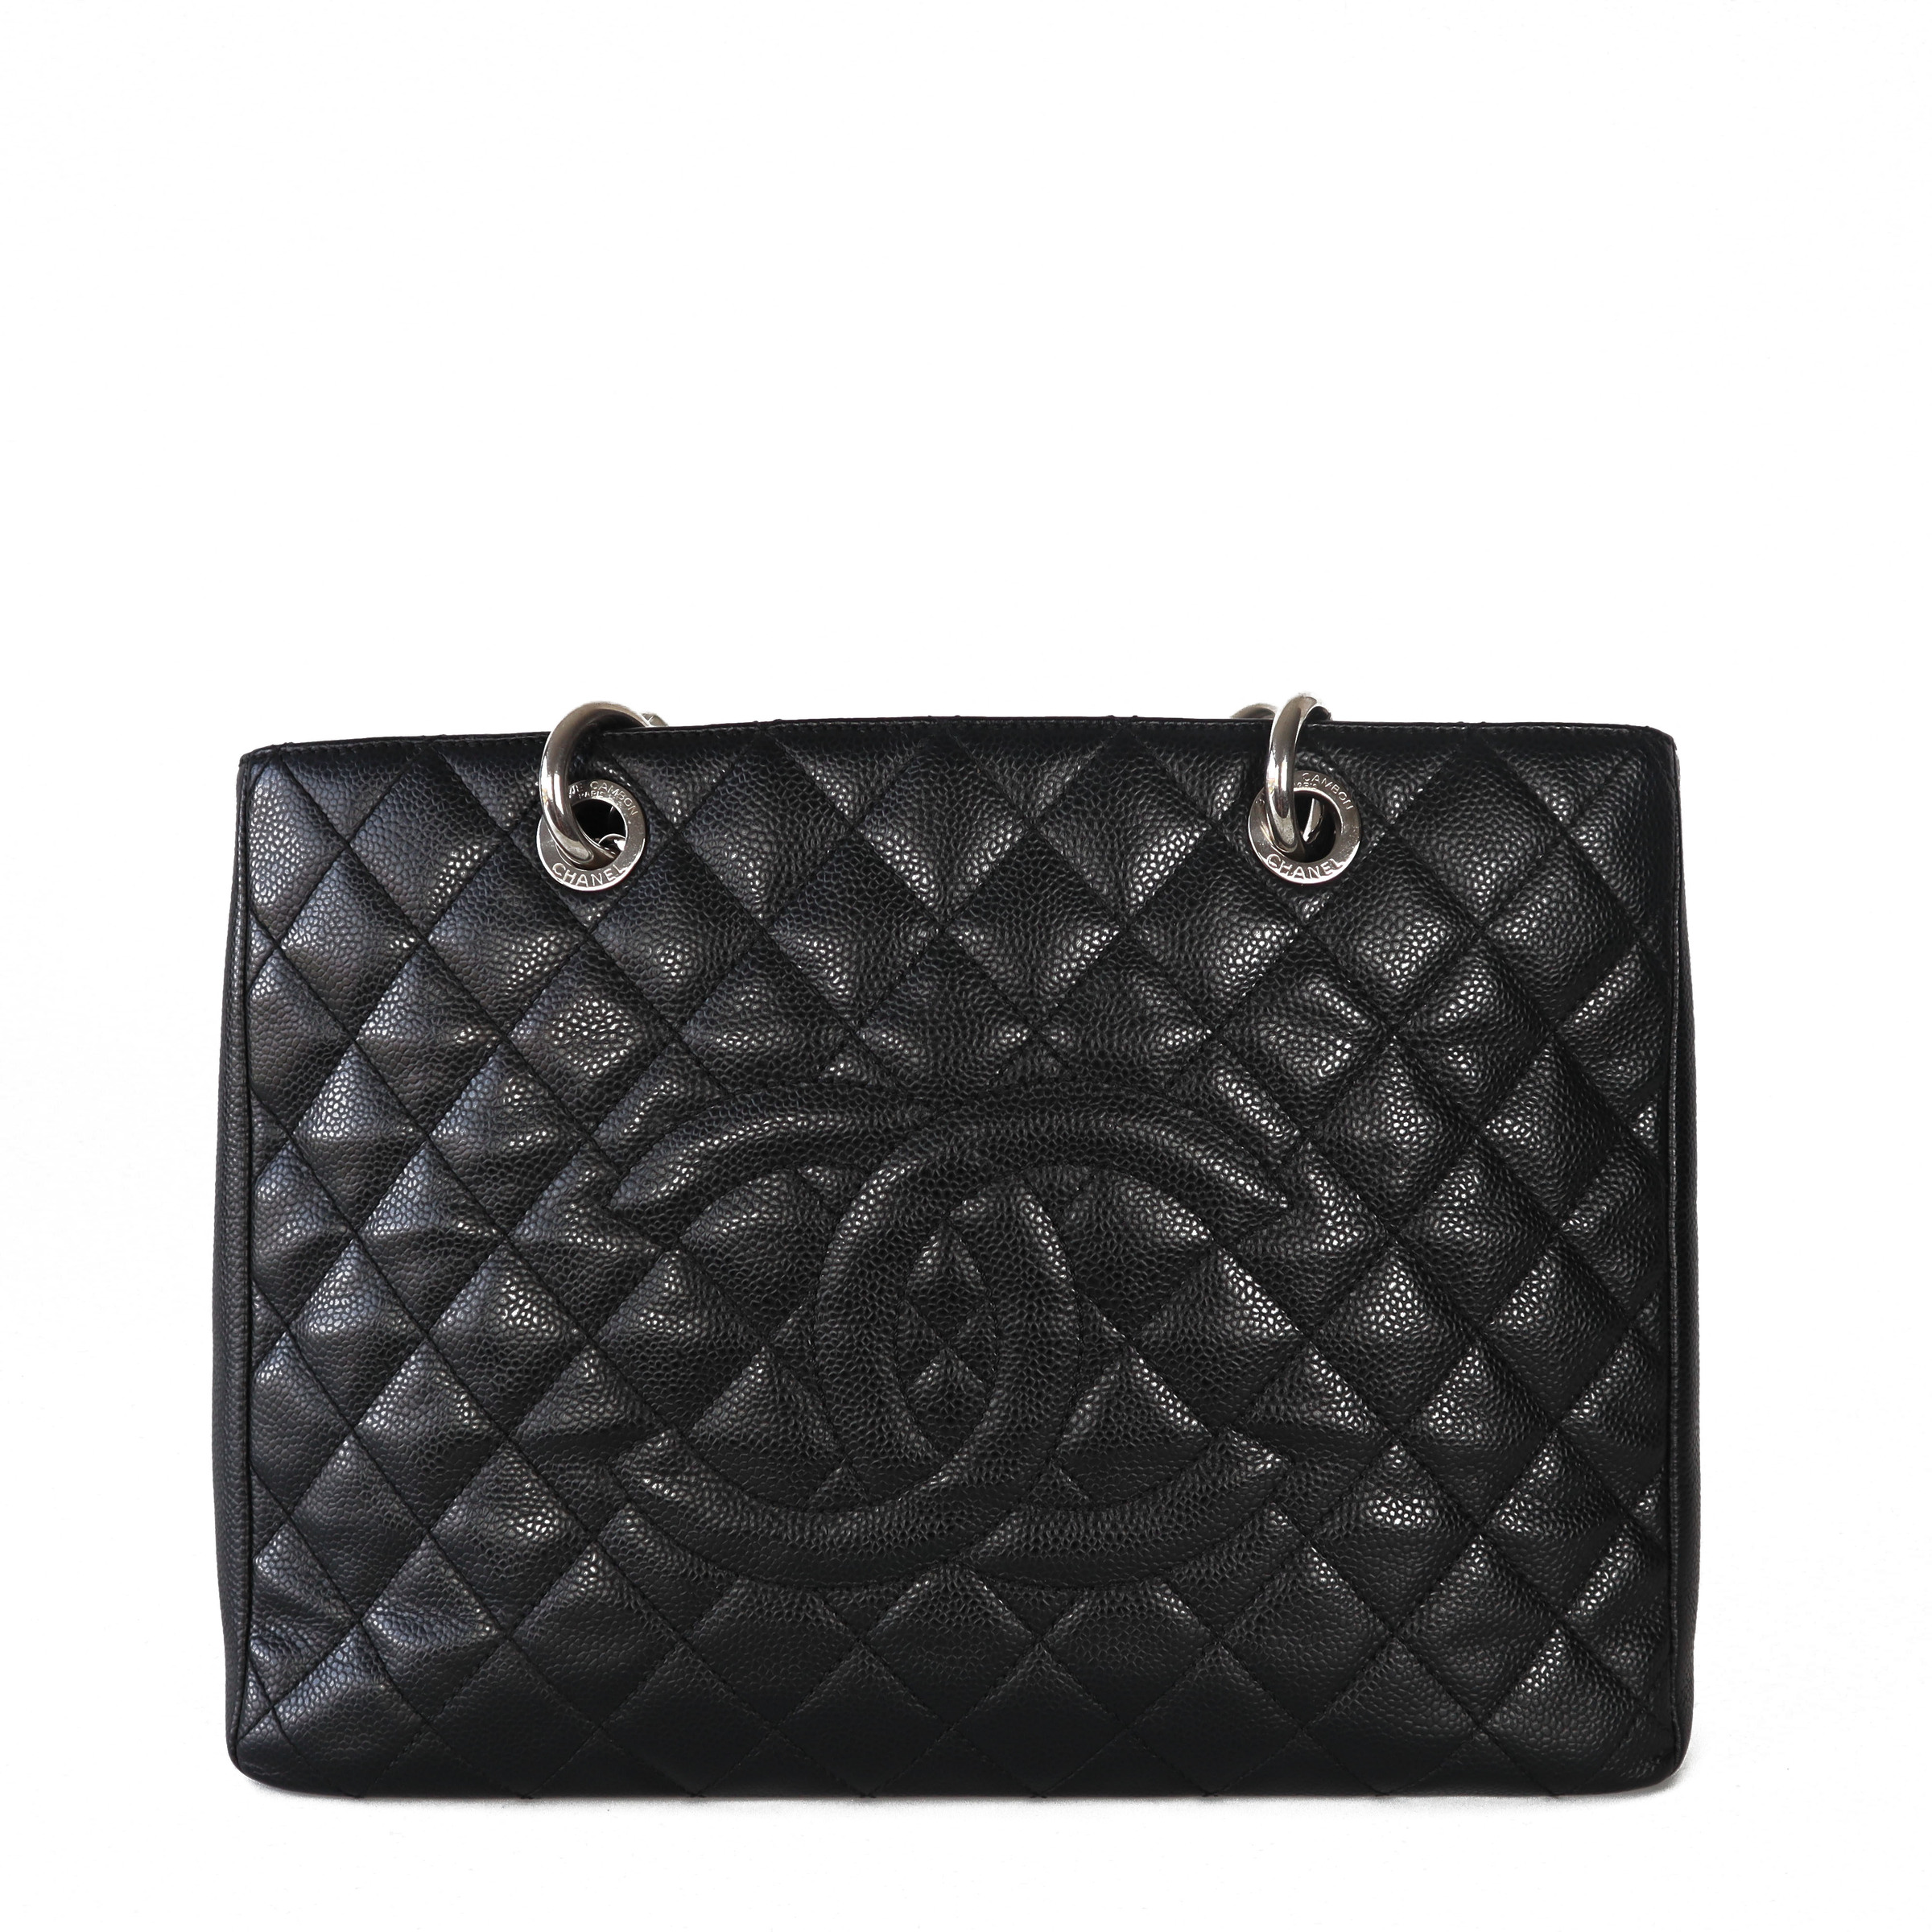 CHANEL, Bags, Chanel Caviar Gst Tote Shopping Bag Black